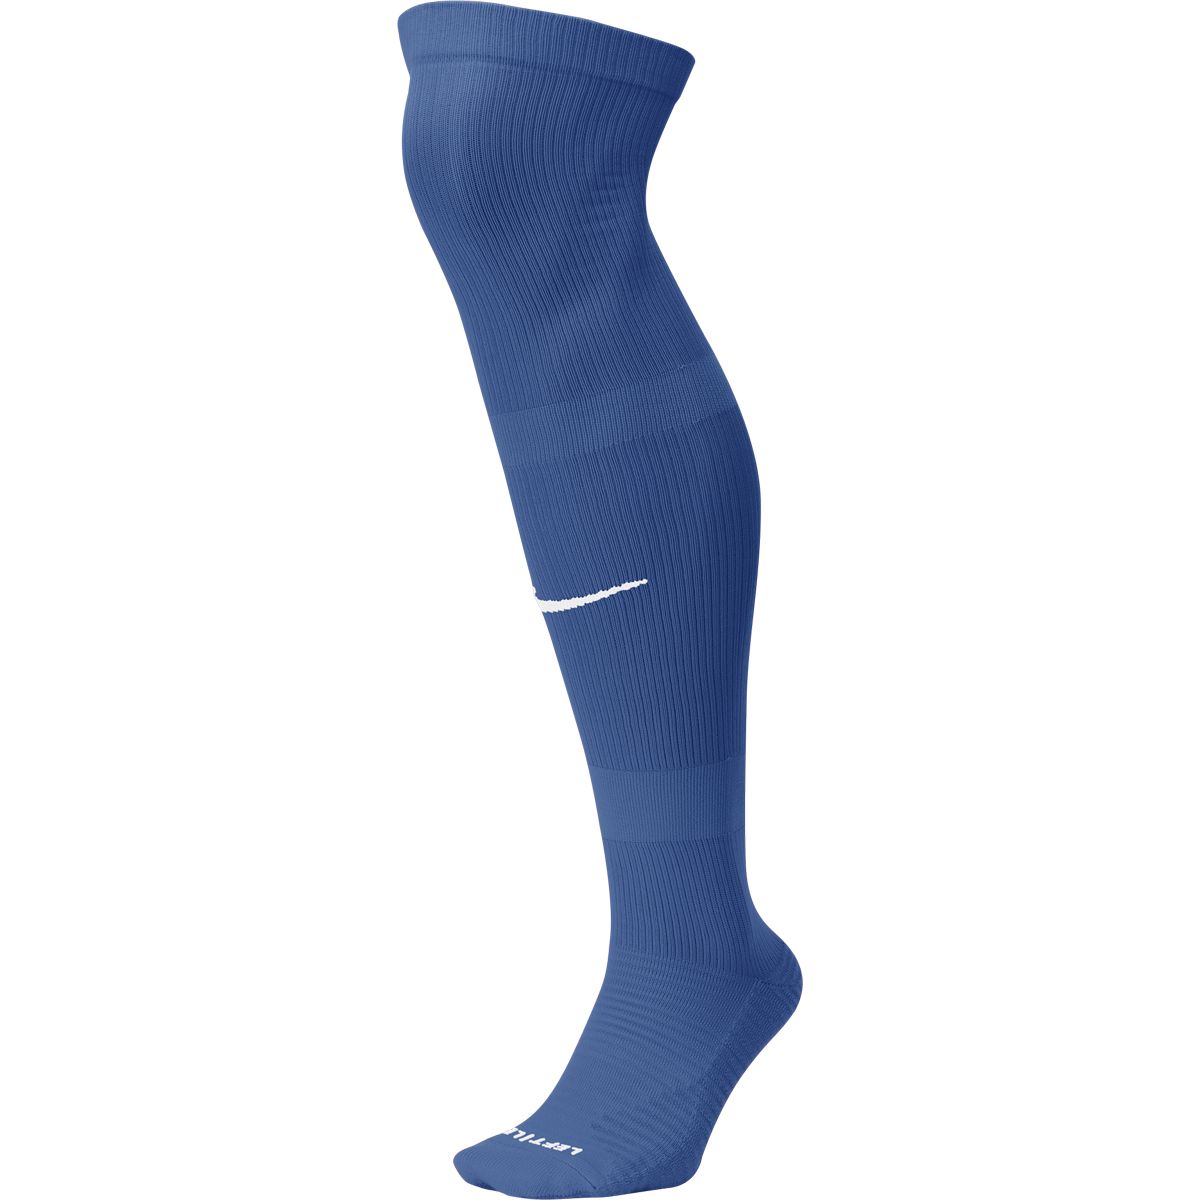 Nike MatchFit Knee-High Unisex Strümpfe